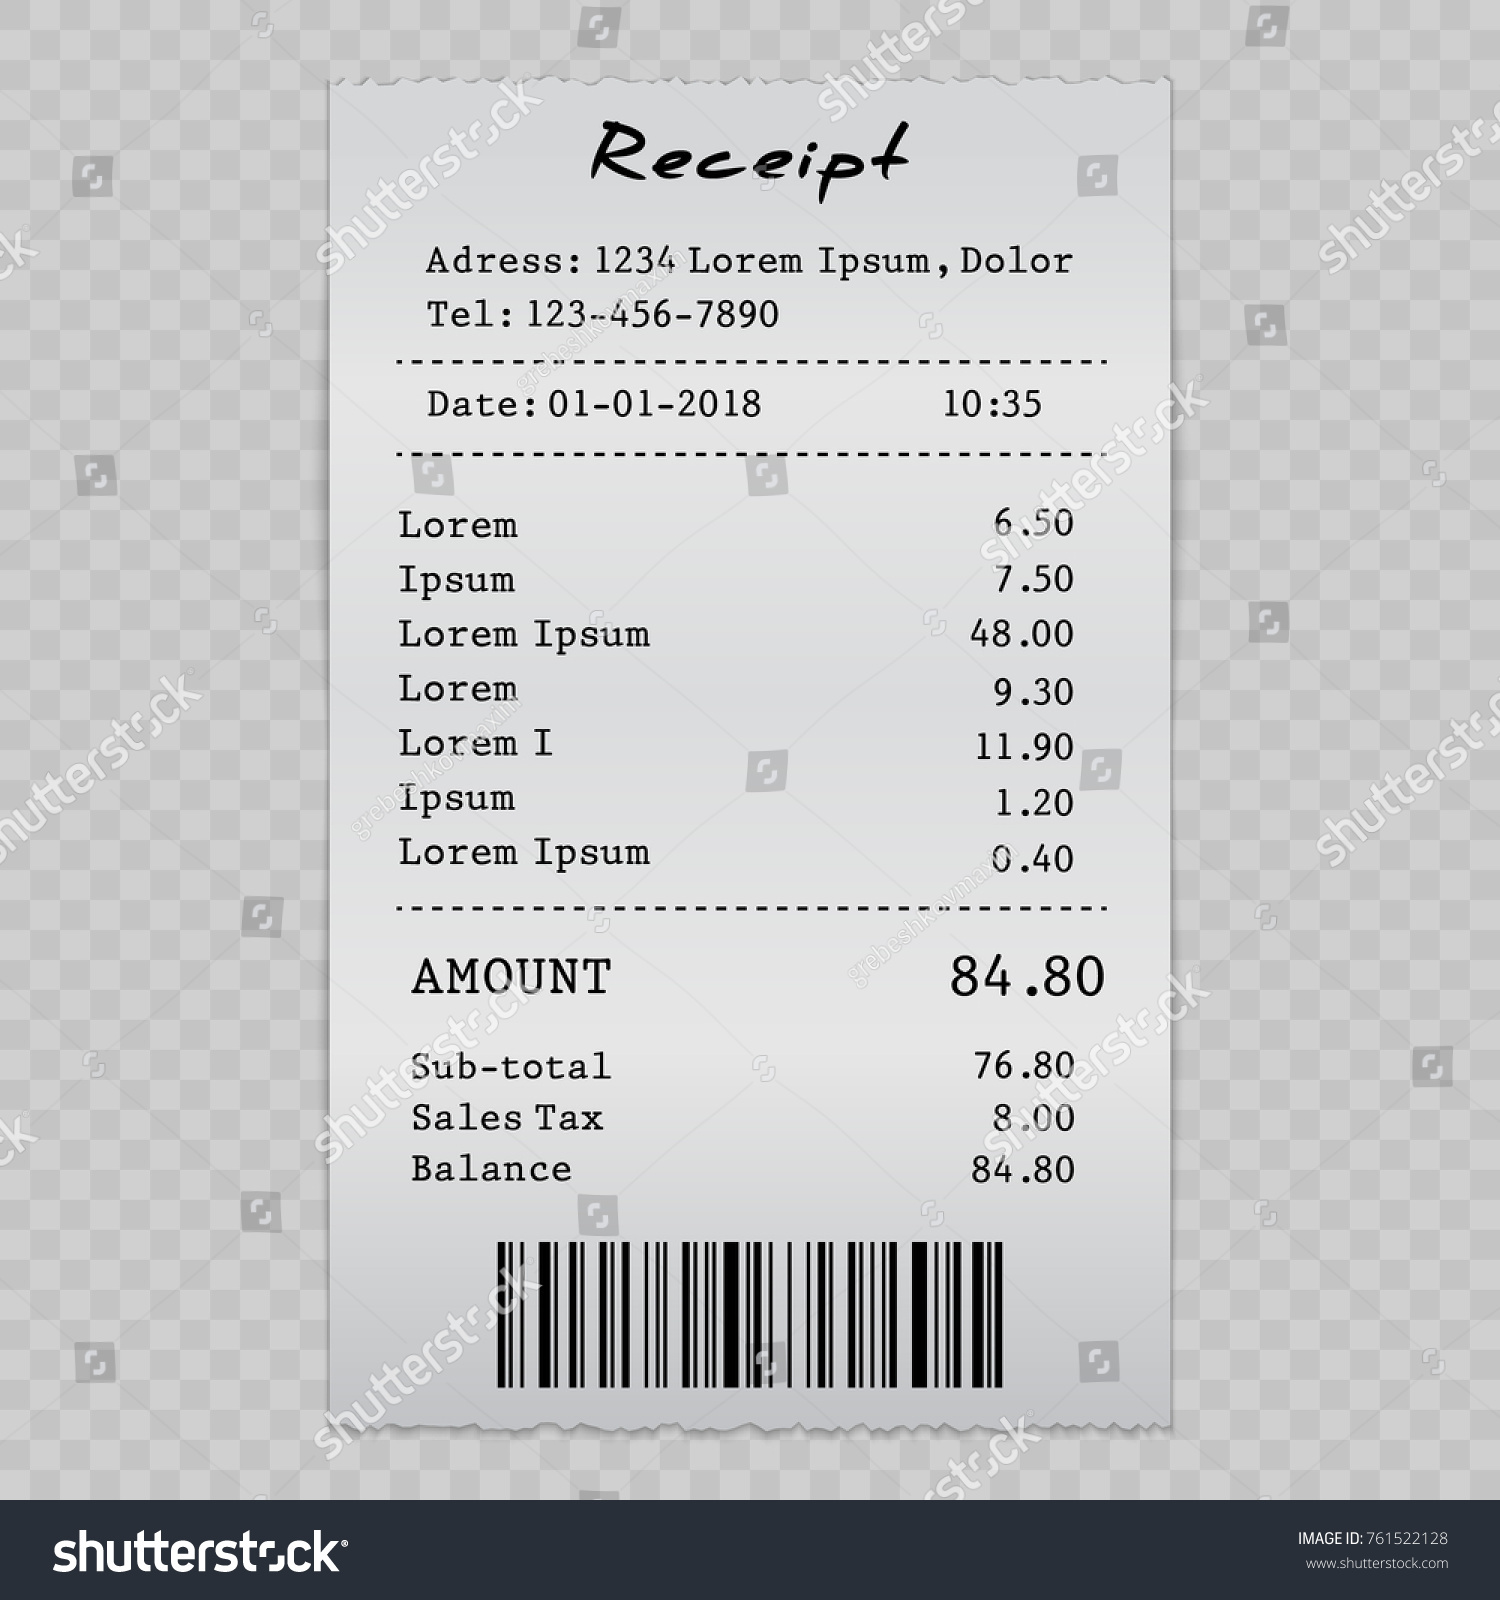 Sales tax on receipt Images, Stock Photos & Vectors | Shutterstock